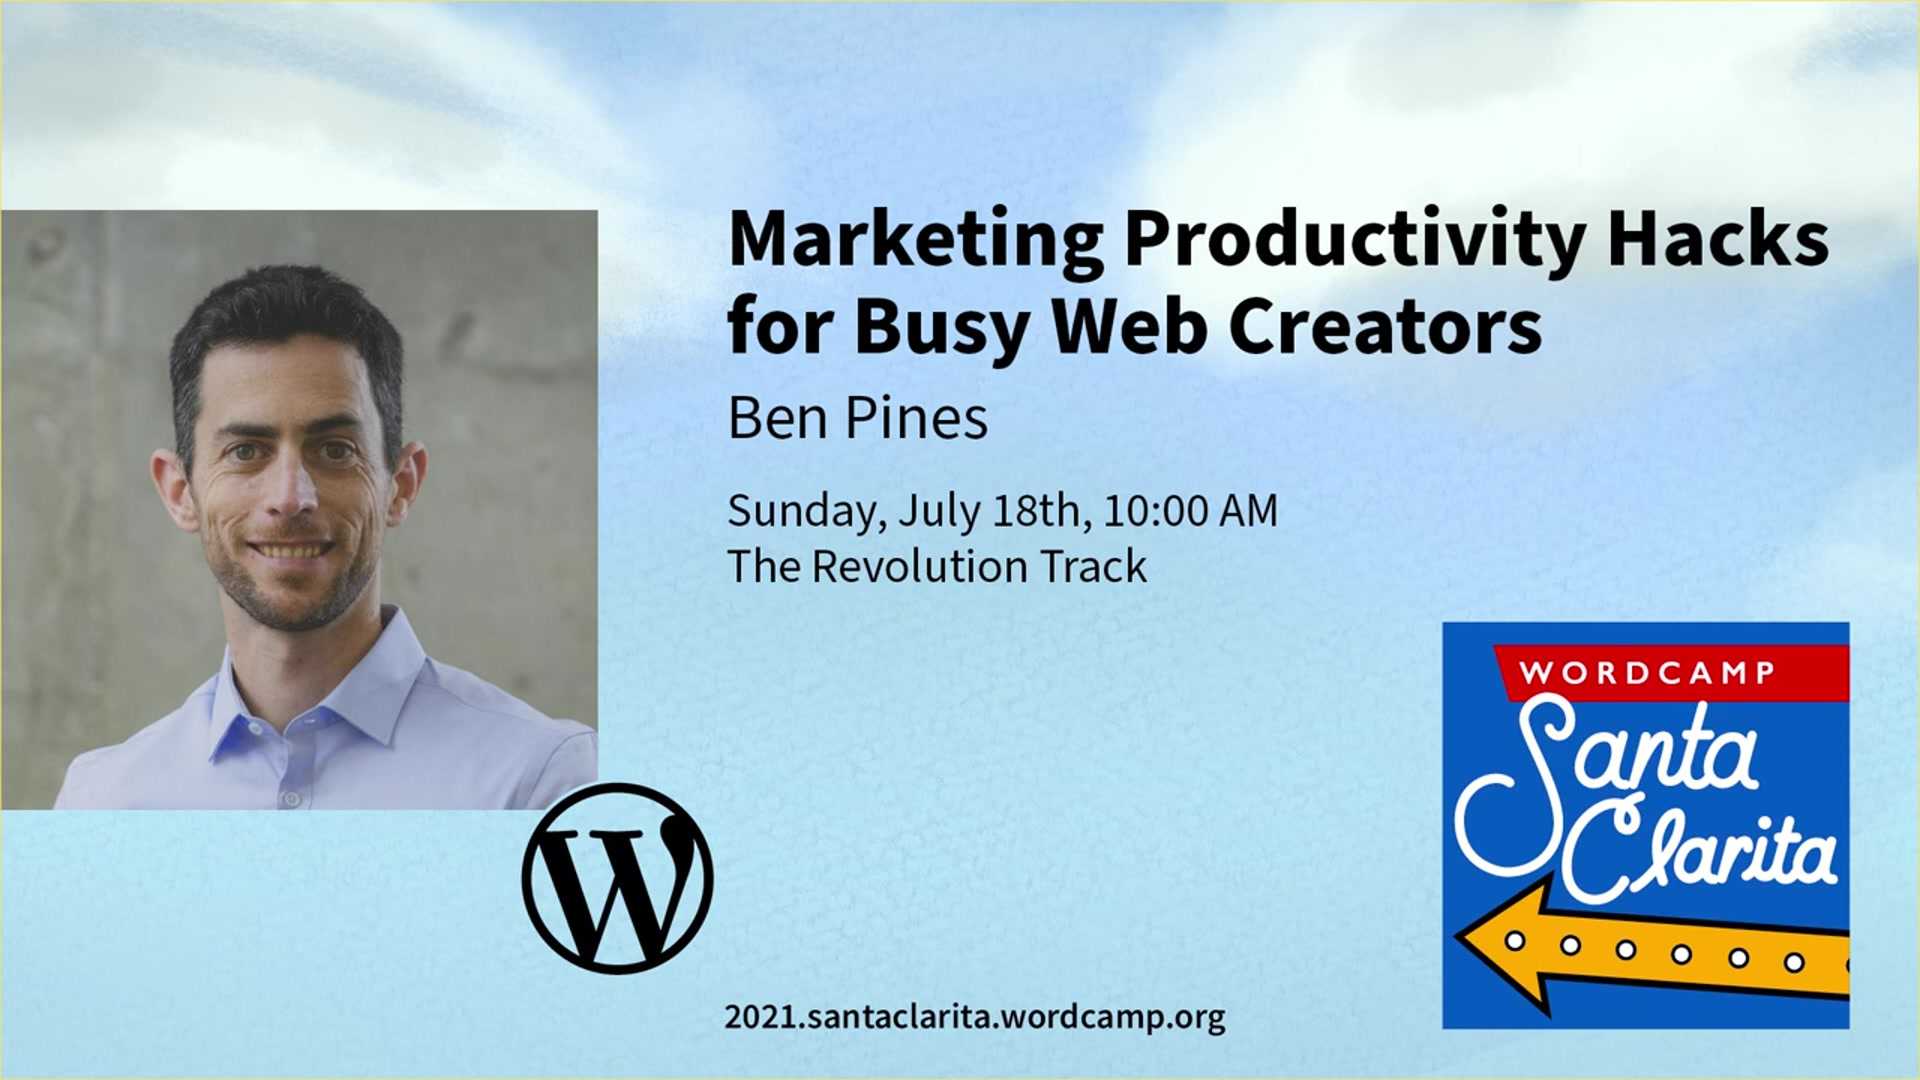 Ben Pines: Marketing Productivity Hacks for Busy Web Creators